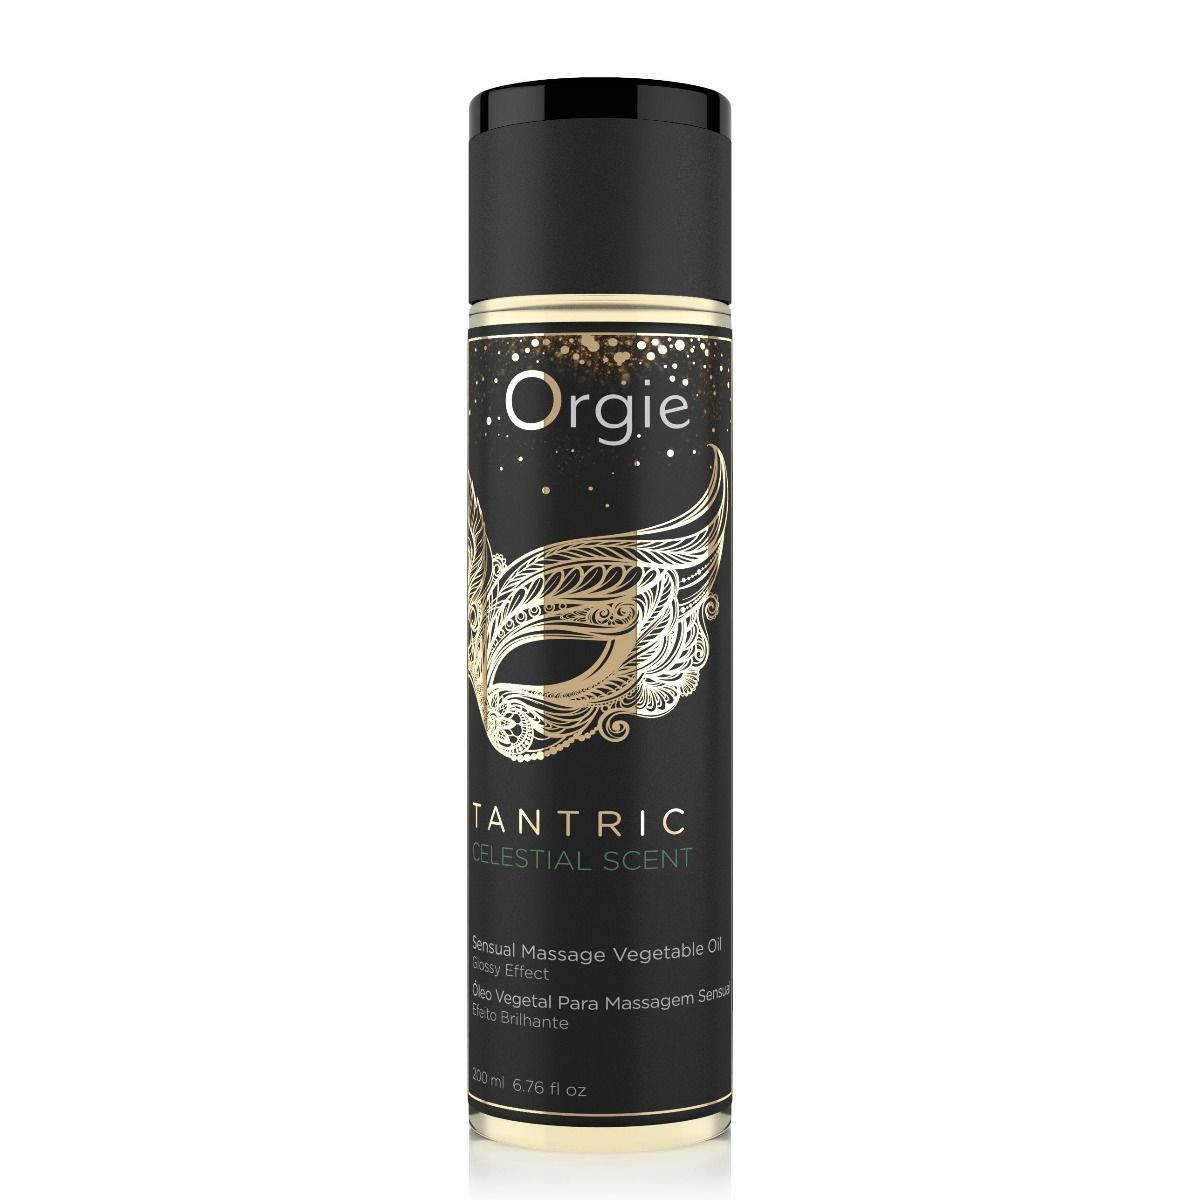 Orgie - Tantric Massage Oil - Celestial Scent